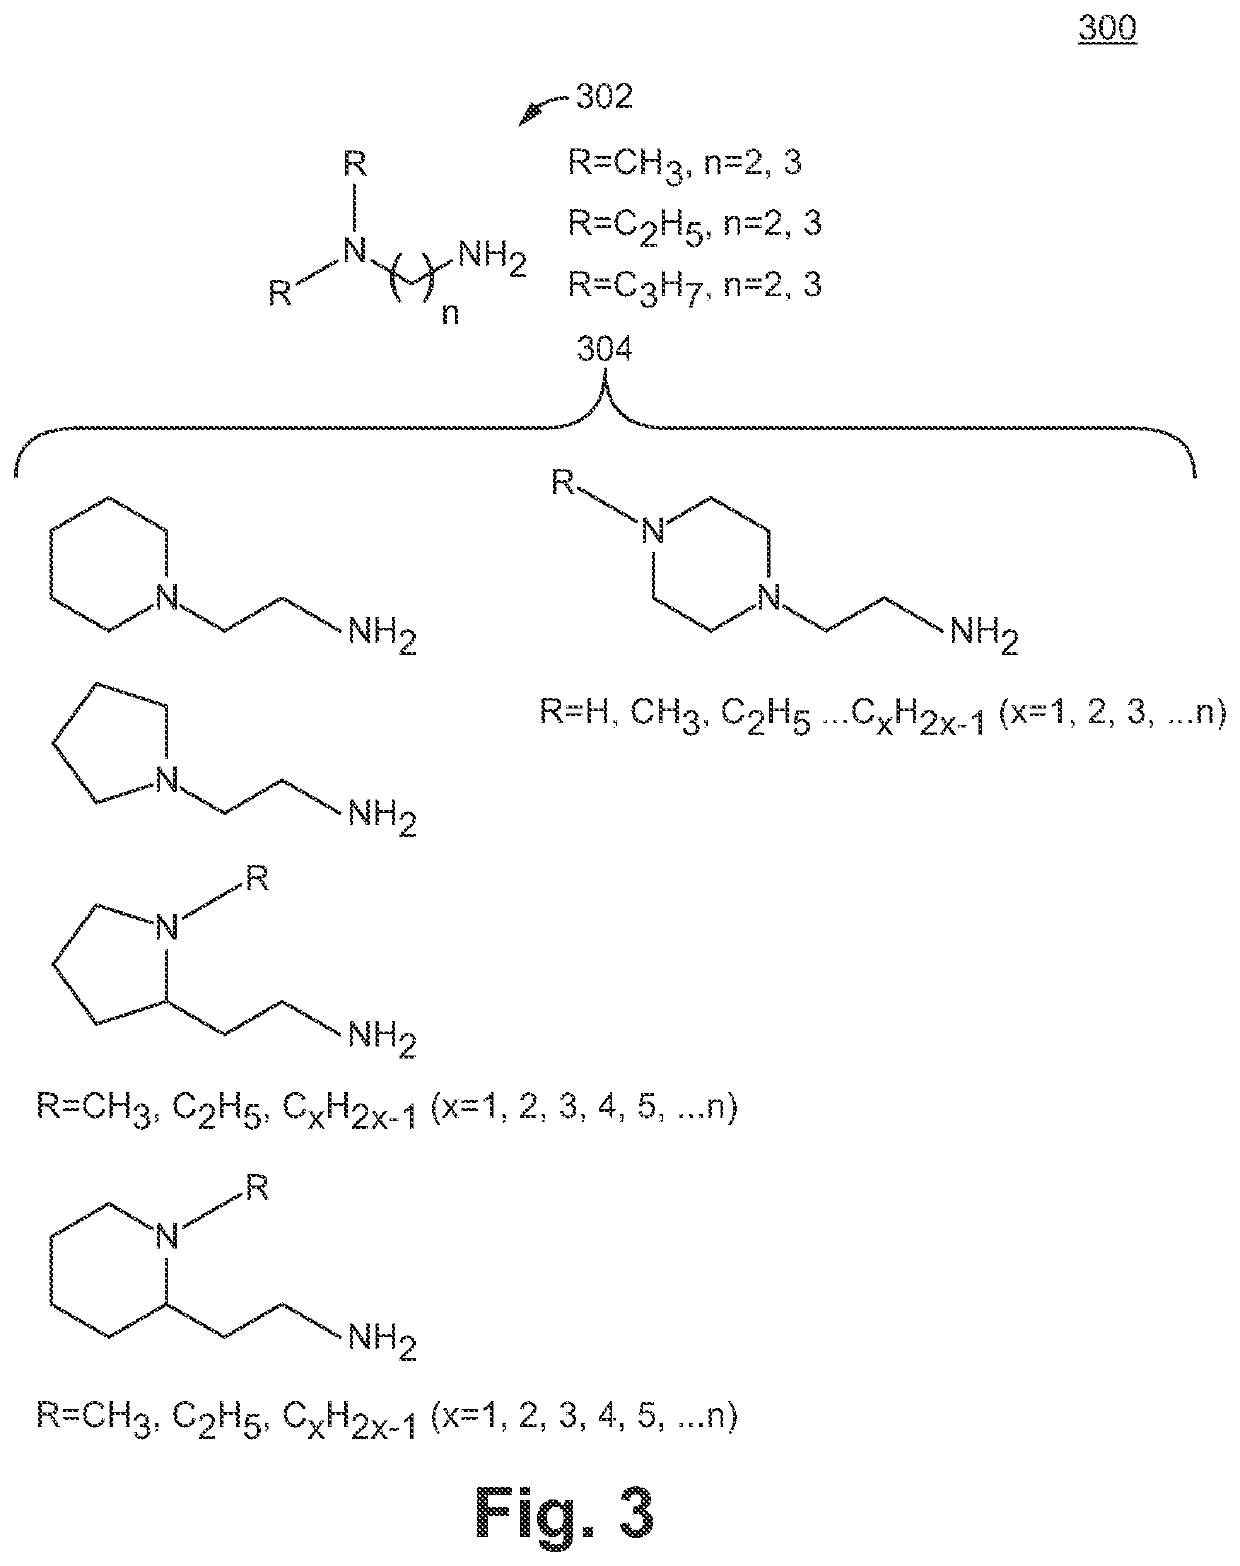 Sulfonamide based anion exchange resins